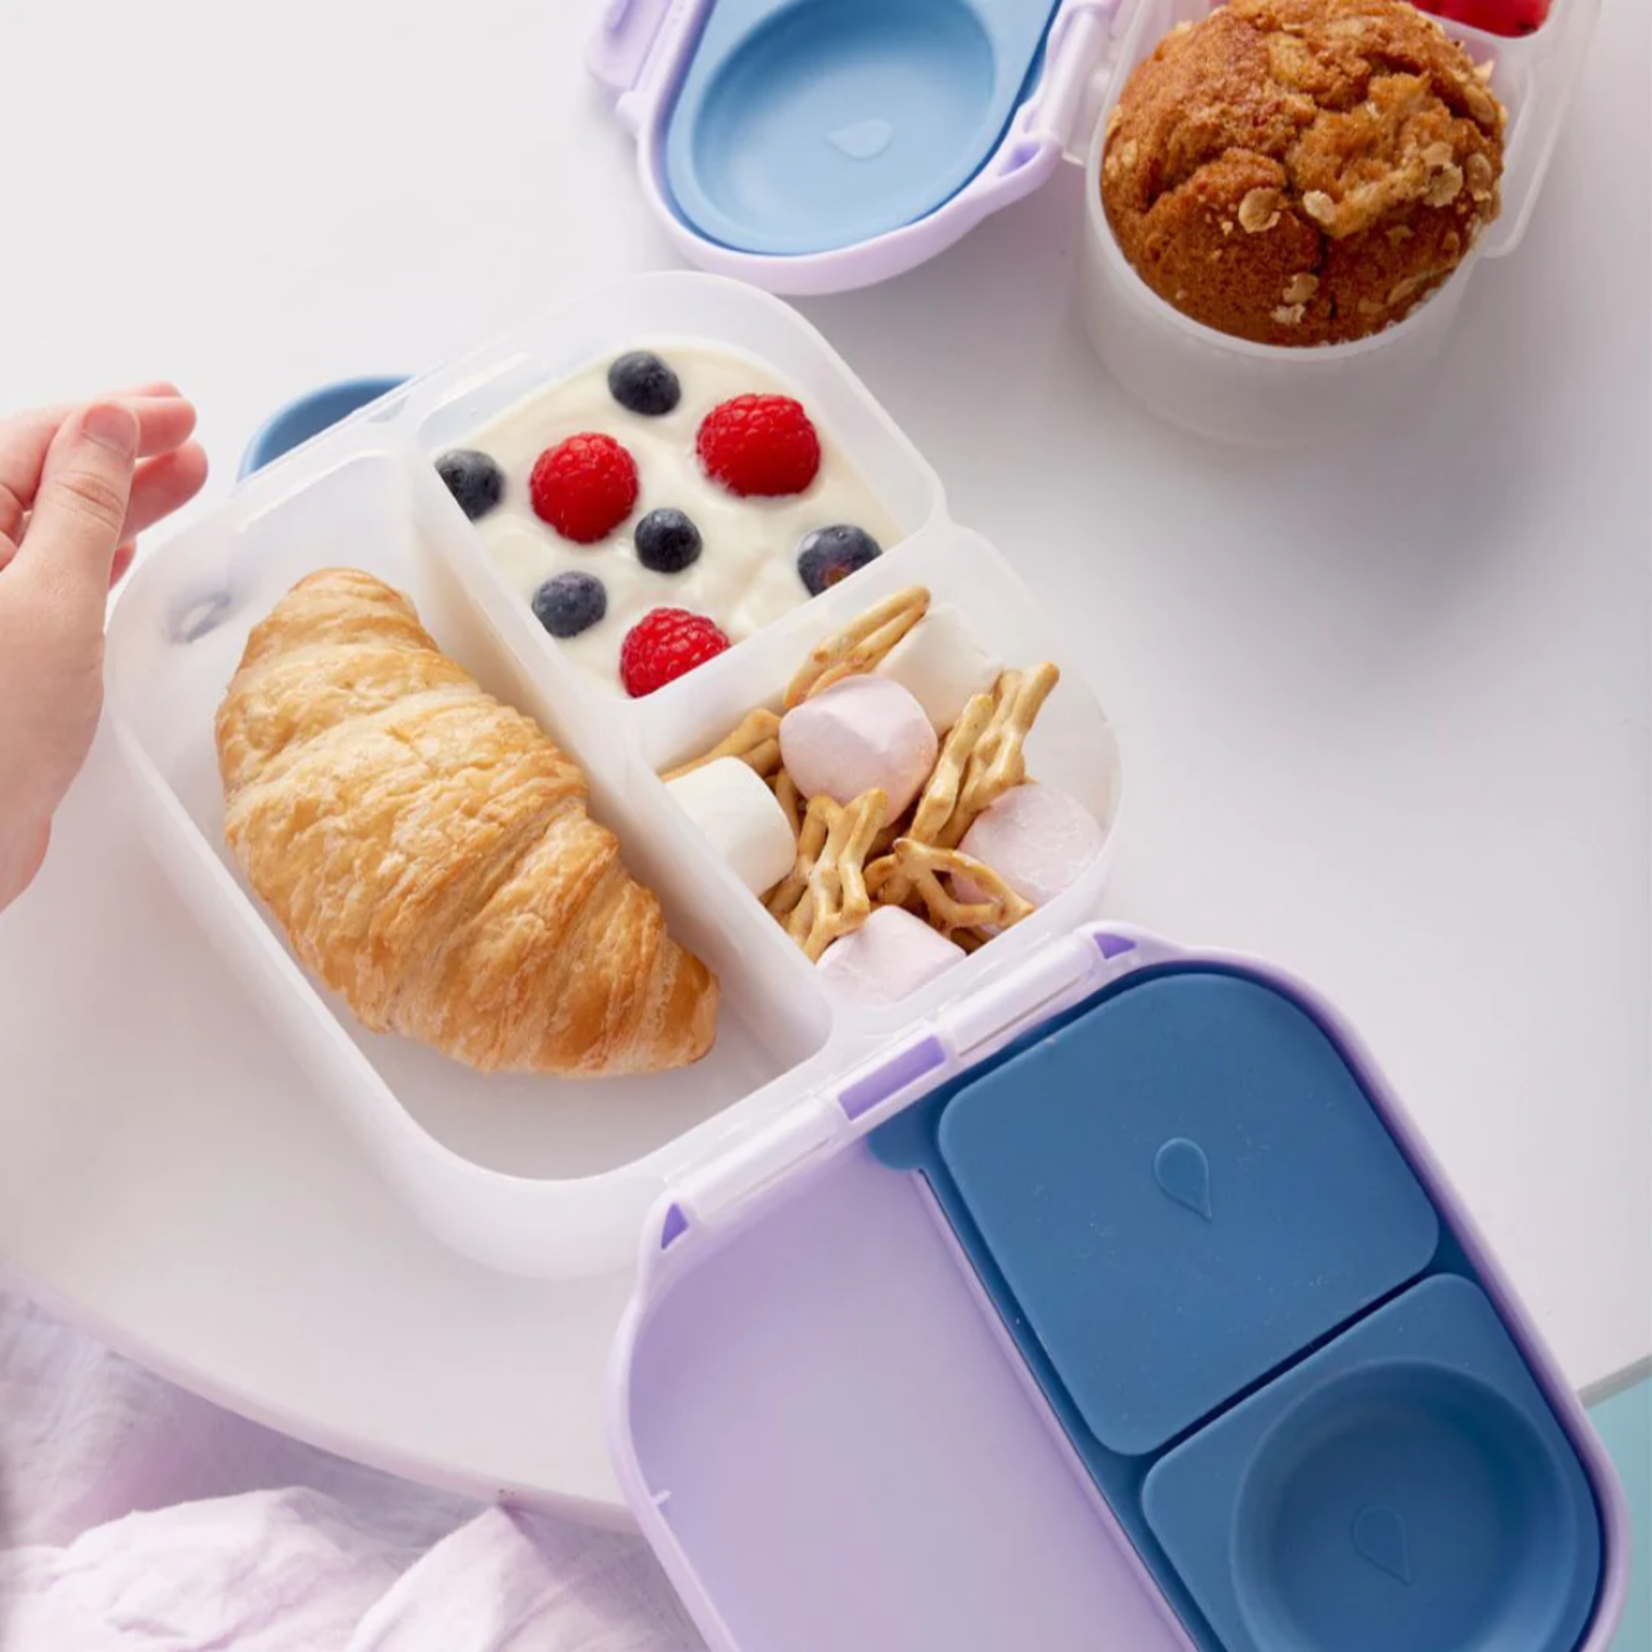 B.Box Disney mini lunchbox - Frozen